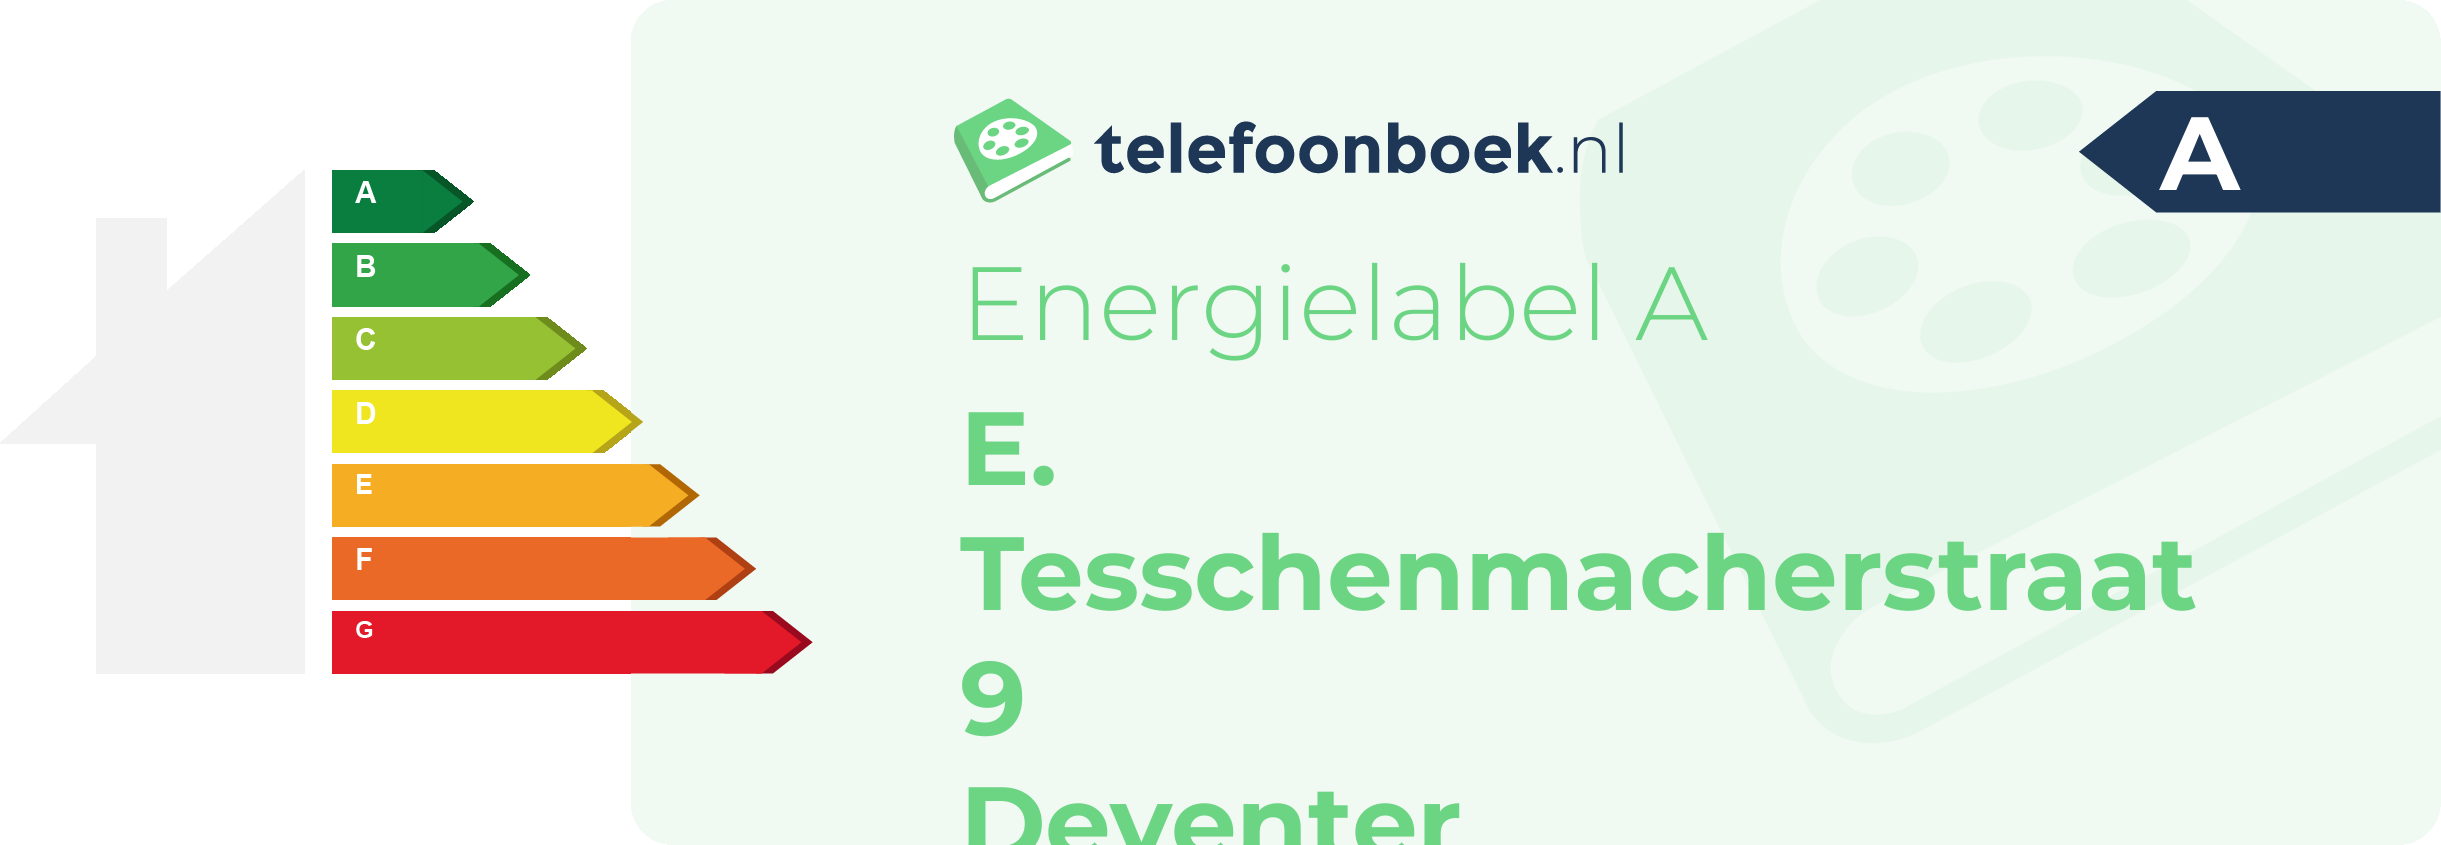 Energielabel E. Tesschenmacherstraat 9 Deventer